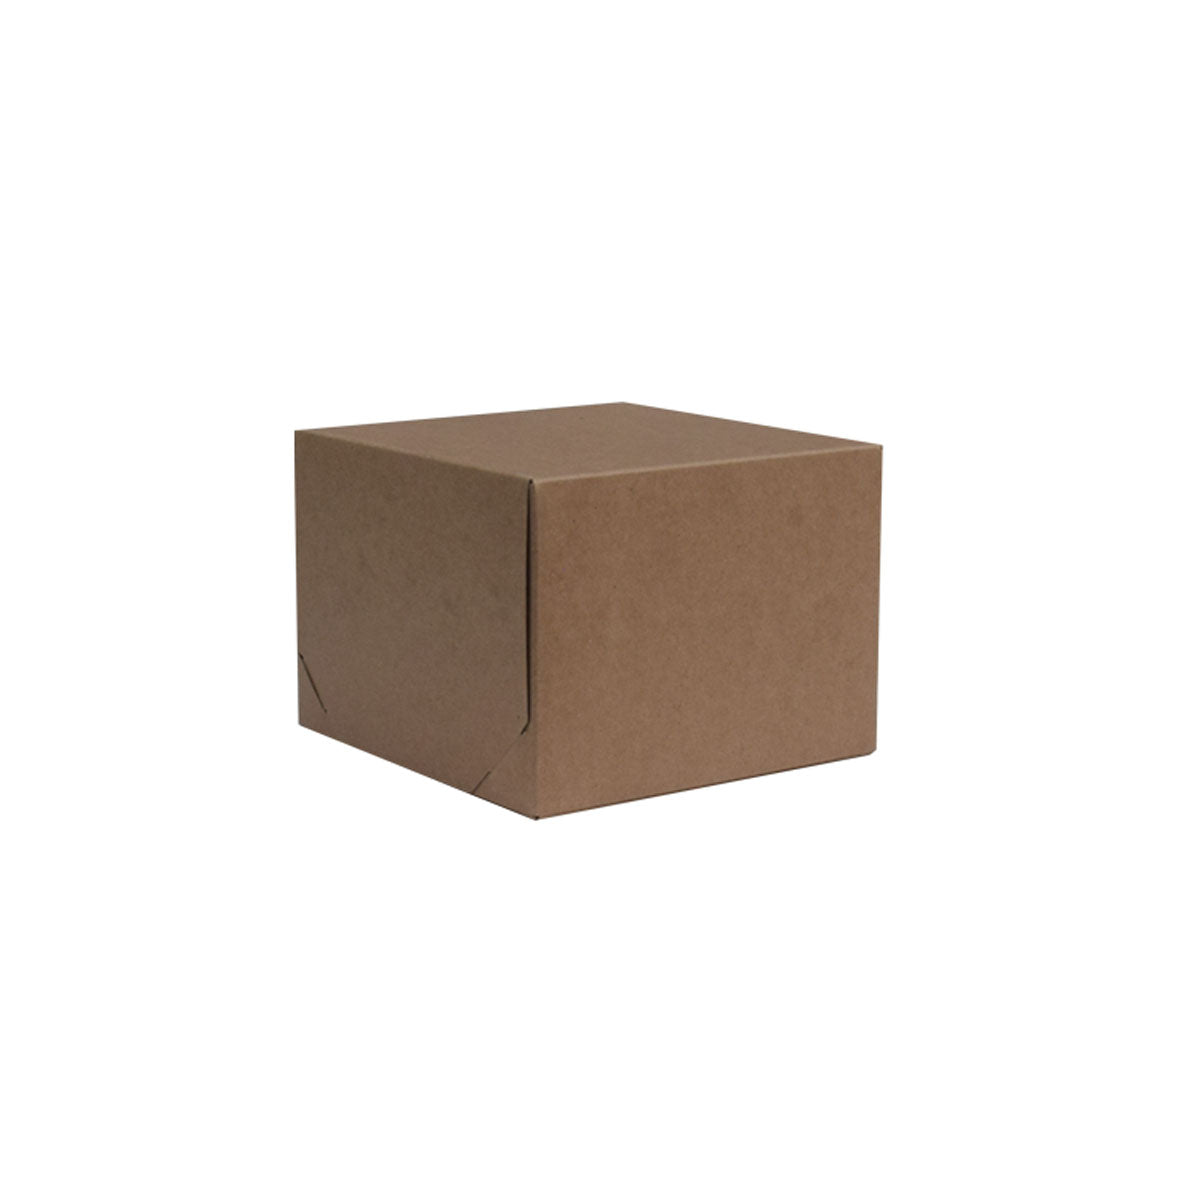 2 Piece Gift Box Natural Kraft 254x254x127mm